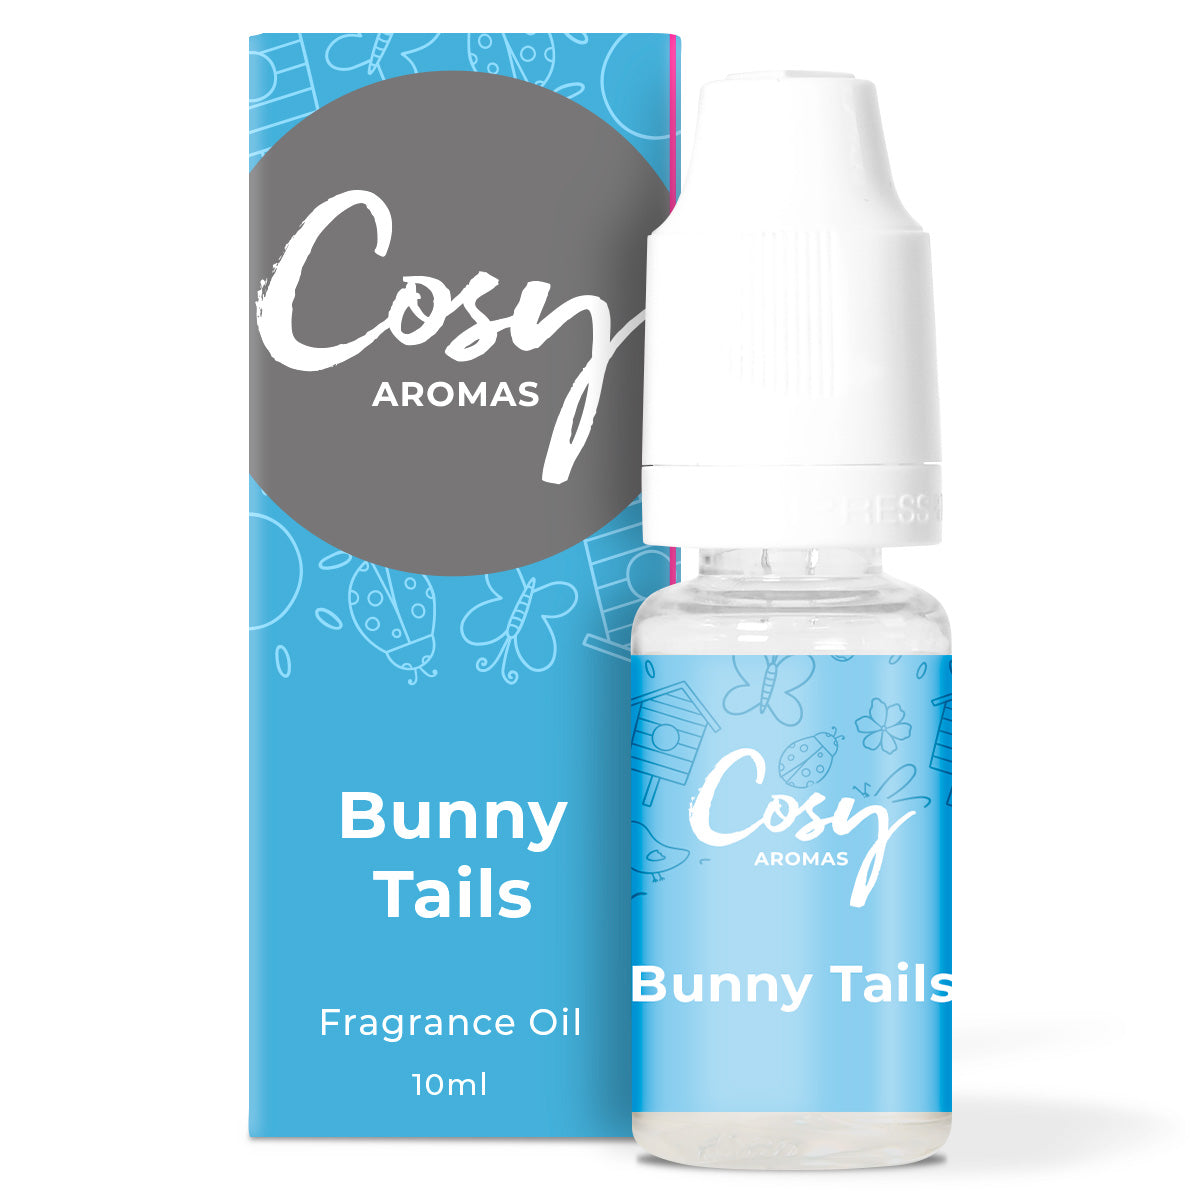 Bunny Tails Fragrance Oil